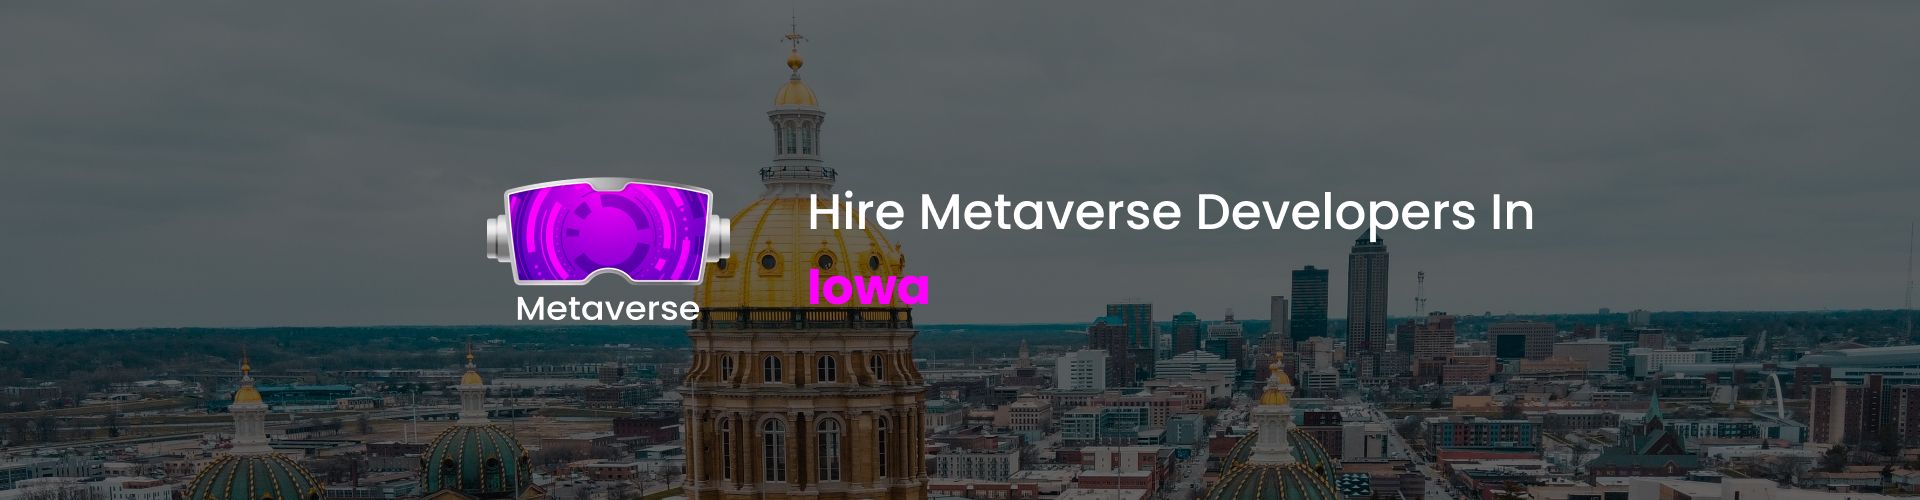 hire metaverse developers in iowa